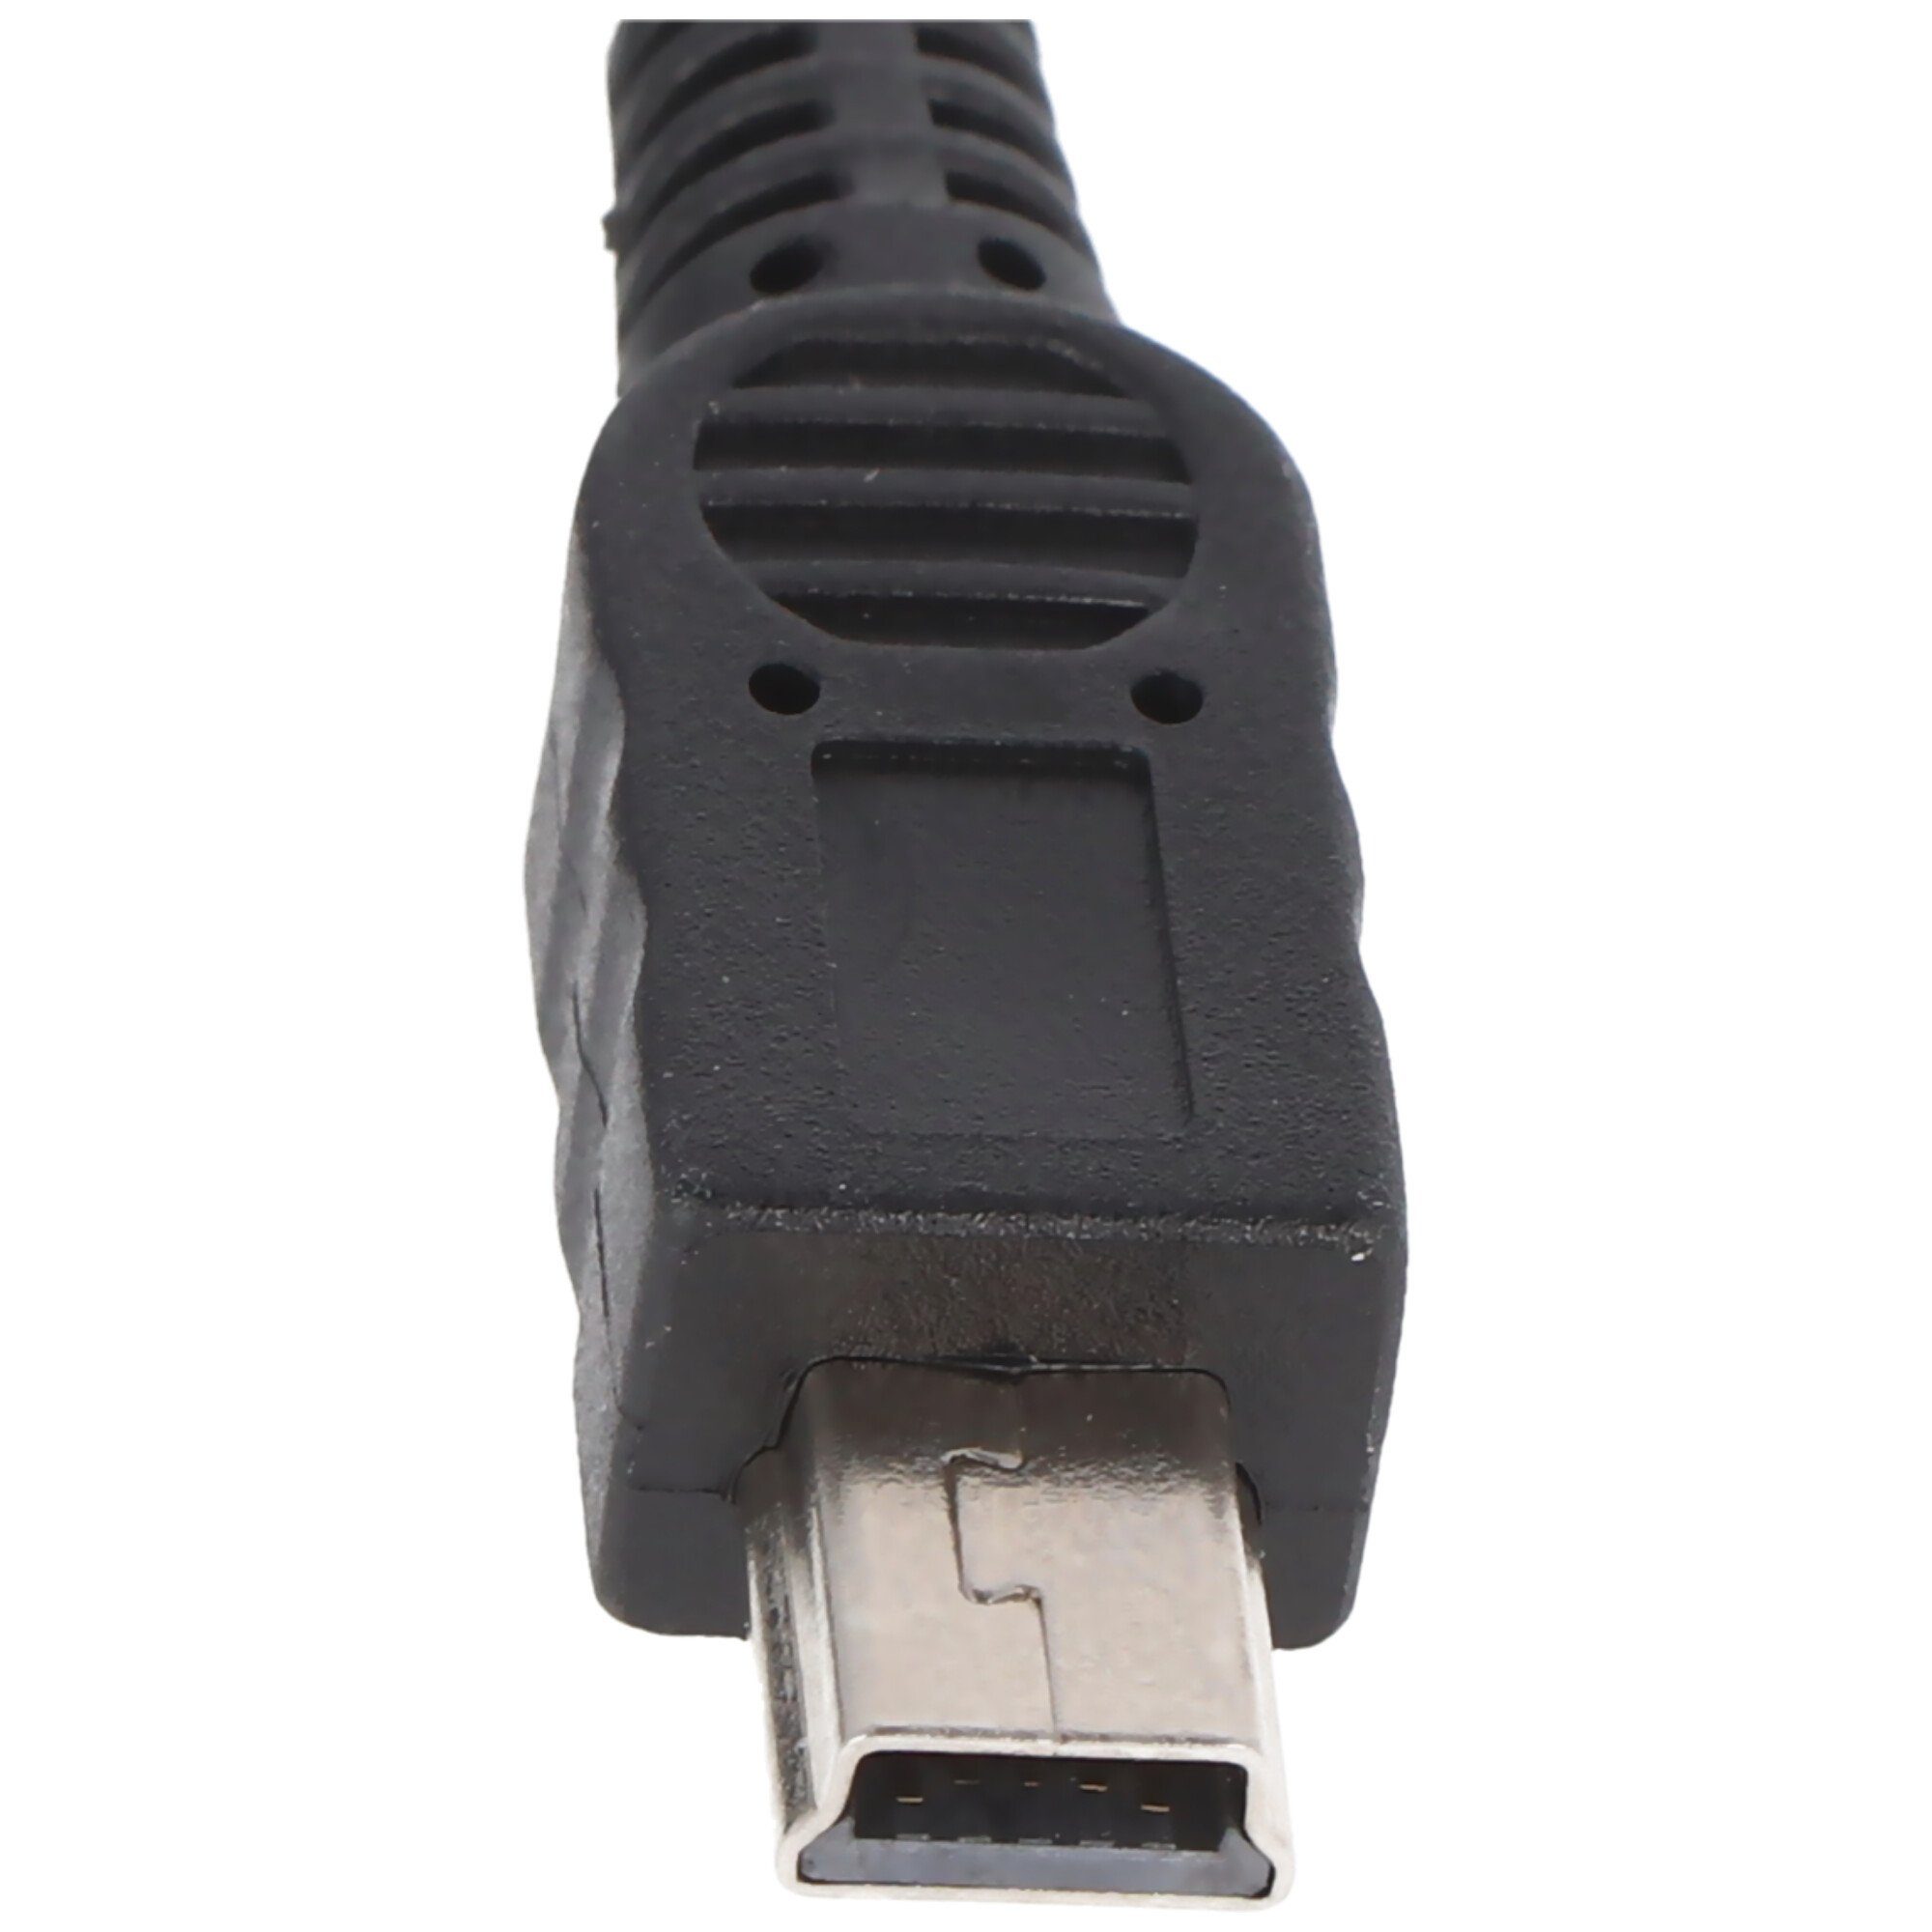 AccuCell USB Datenkabel, Akku Anschlusskabel Ladekabel, USB USB Mini 2.0 auf